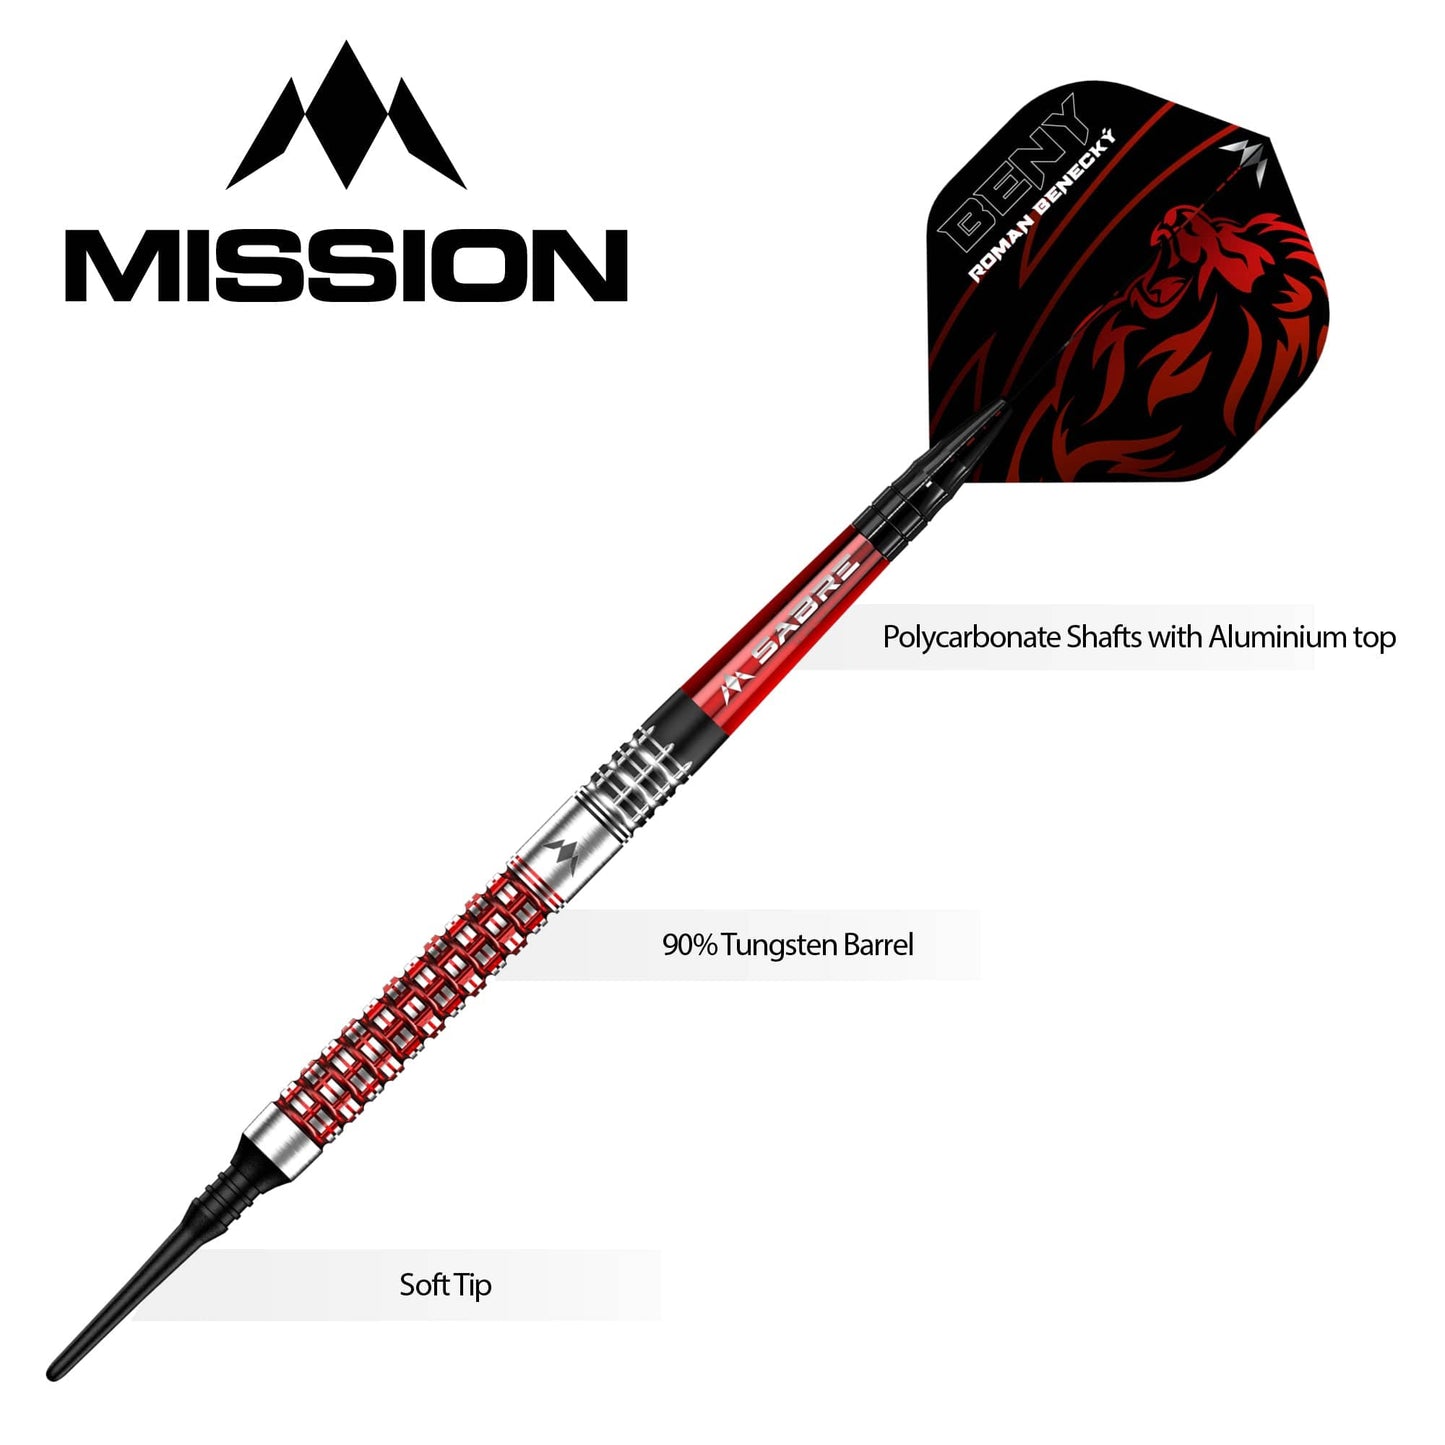 Mission Roman Benecky Darts - Soft Tip - Black & Red - 18g 18g